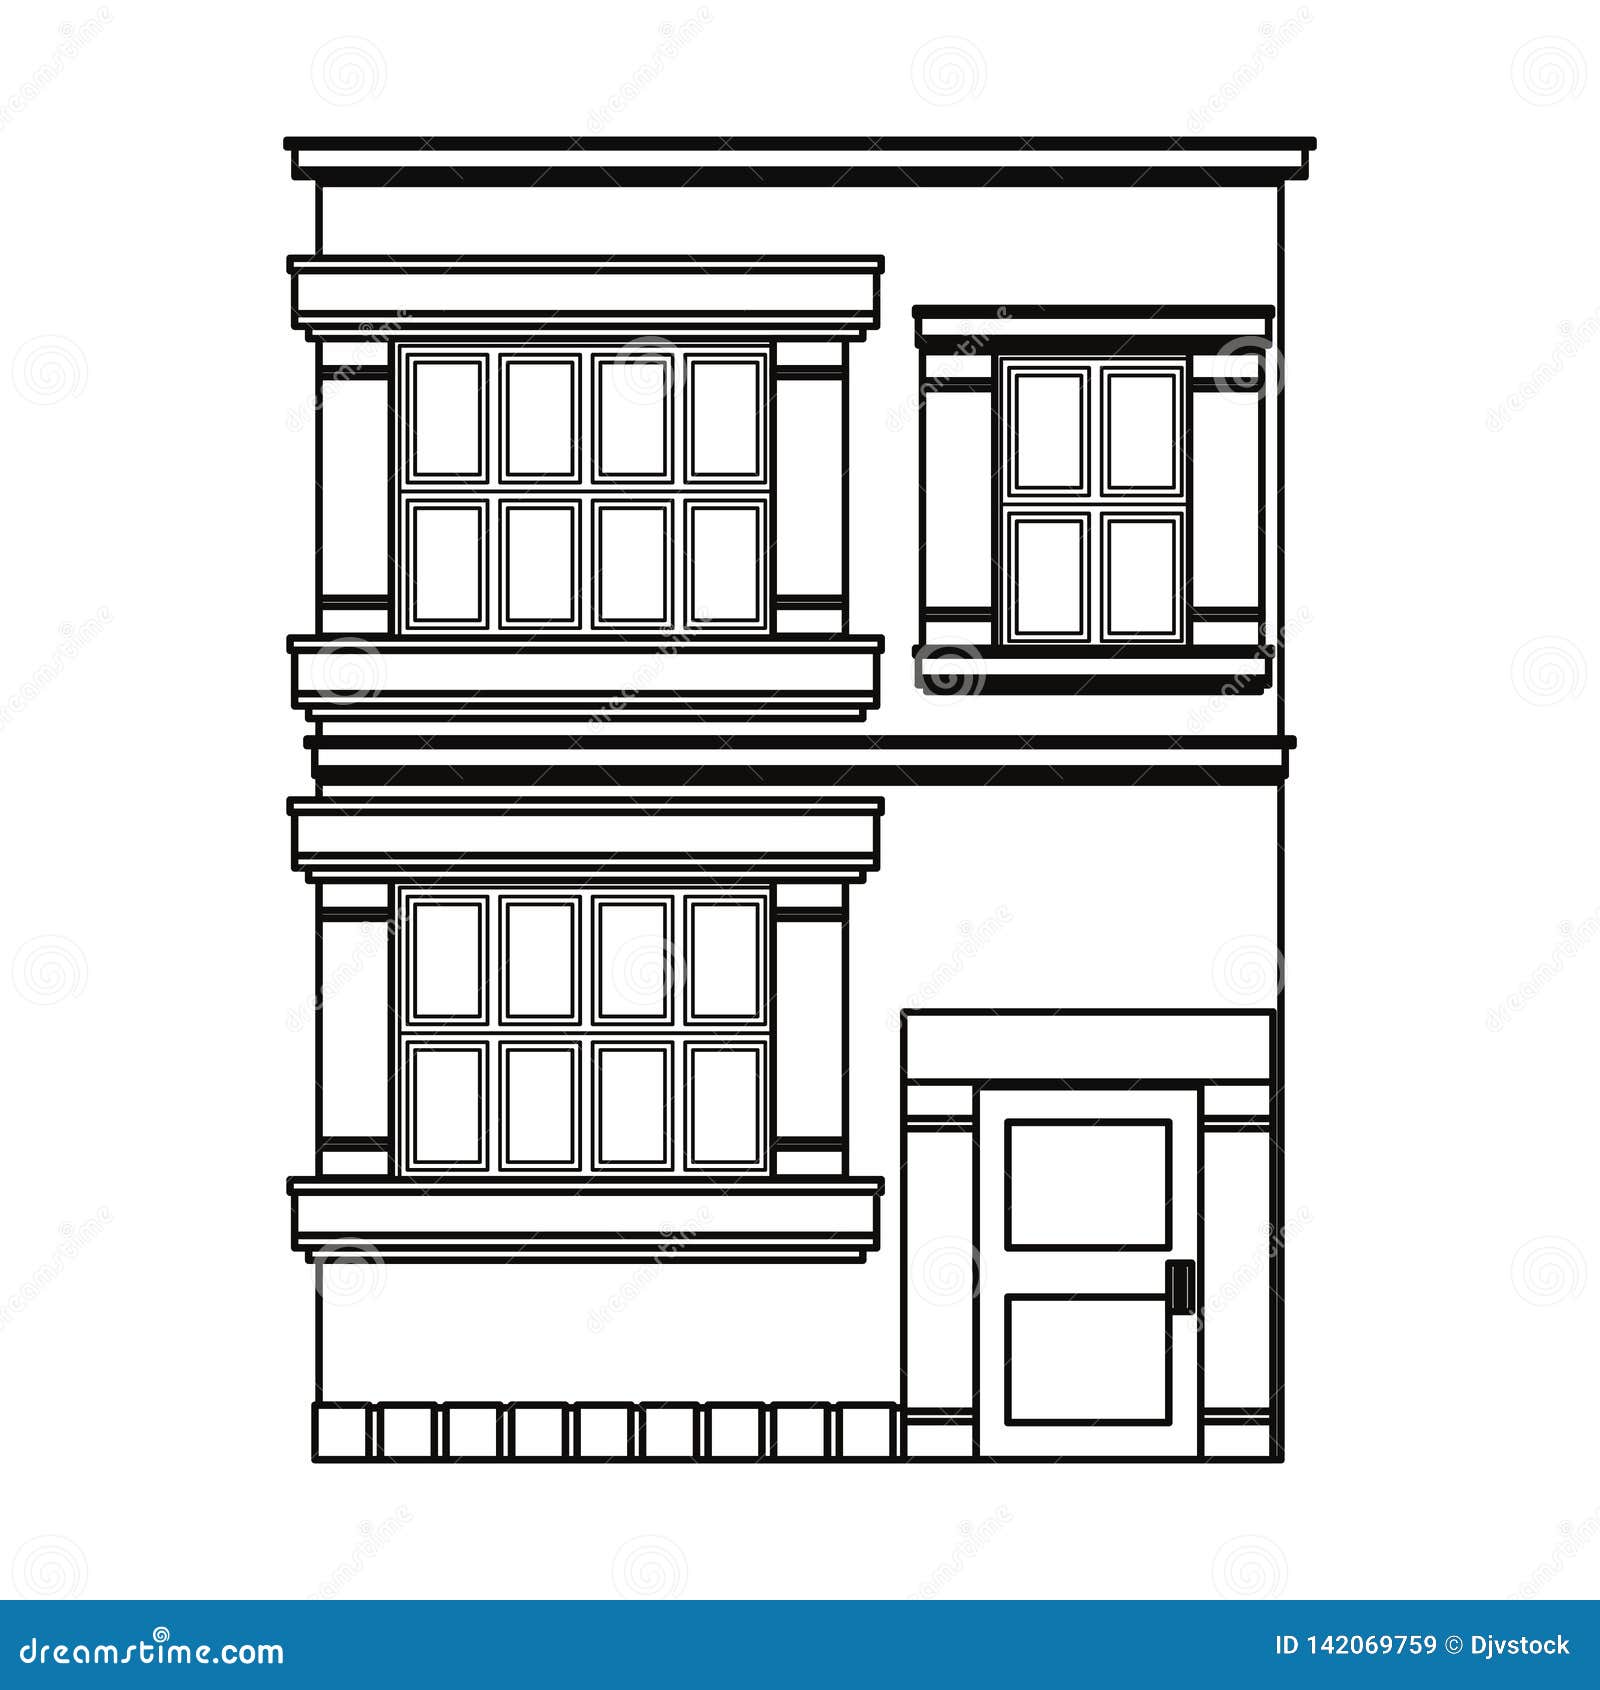 Outline building house on white background vector illustration